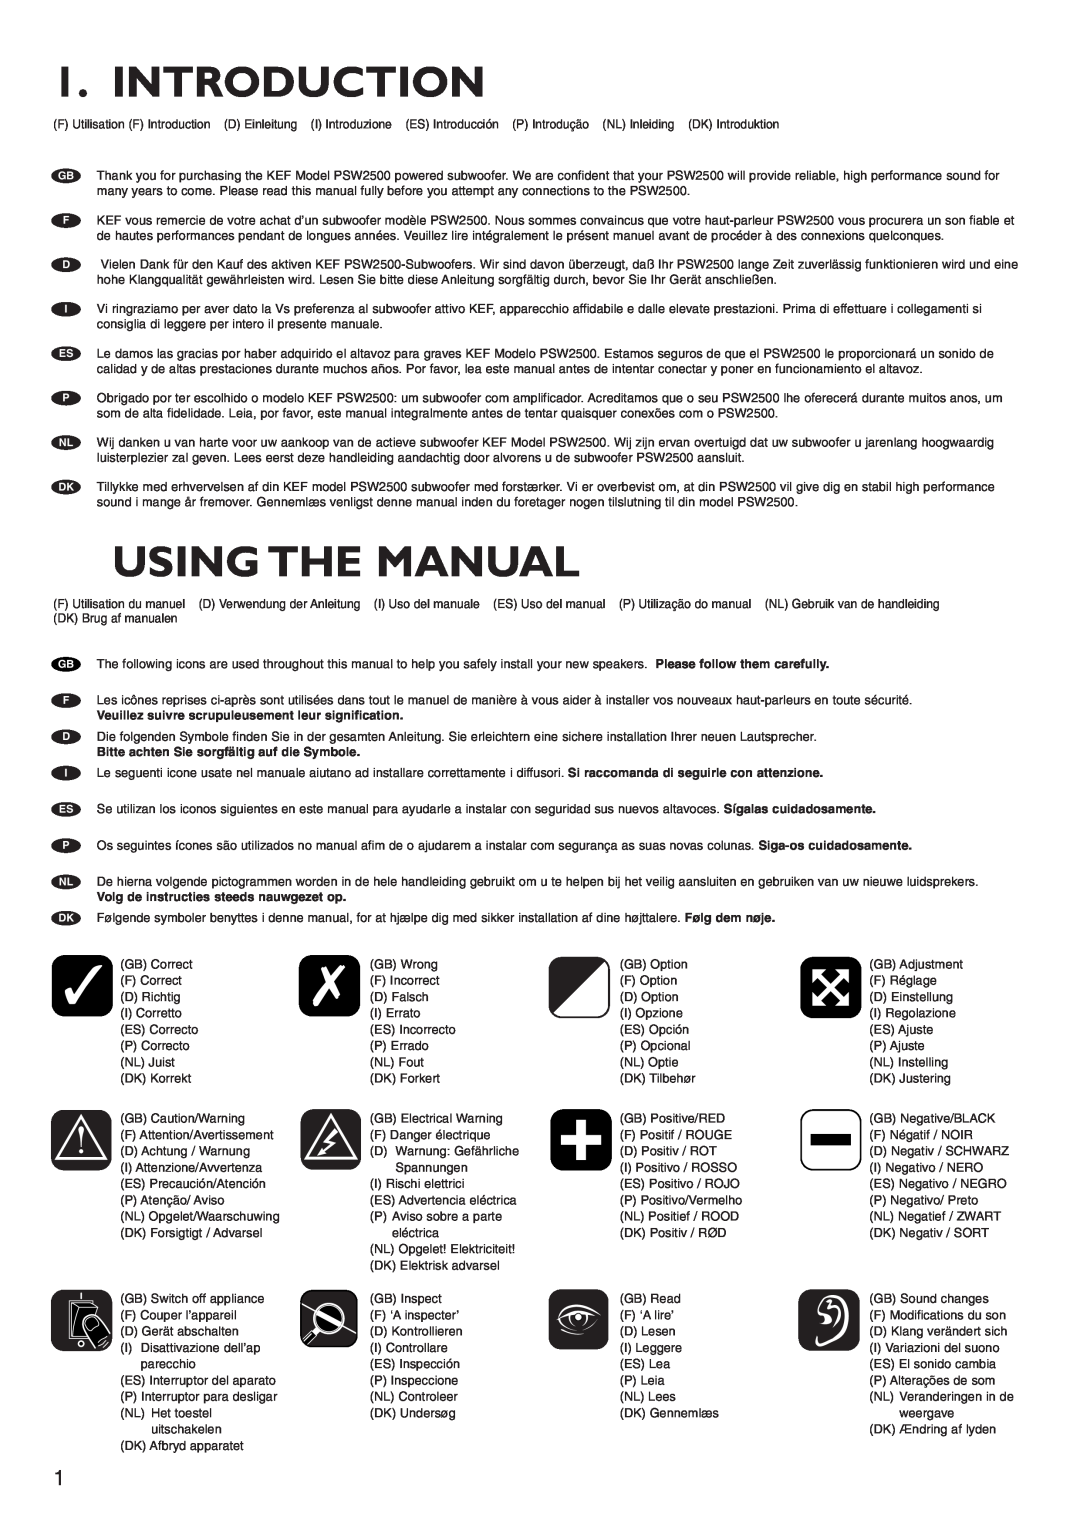 KEF Audio PSW2500 installation manual Introduction, Using The Manual, Bitte achten Sie sorgfältig auf die Symbole 